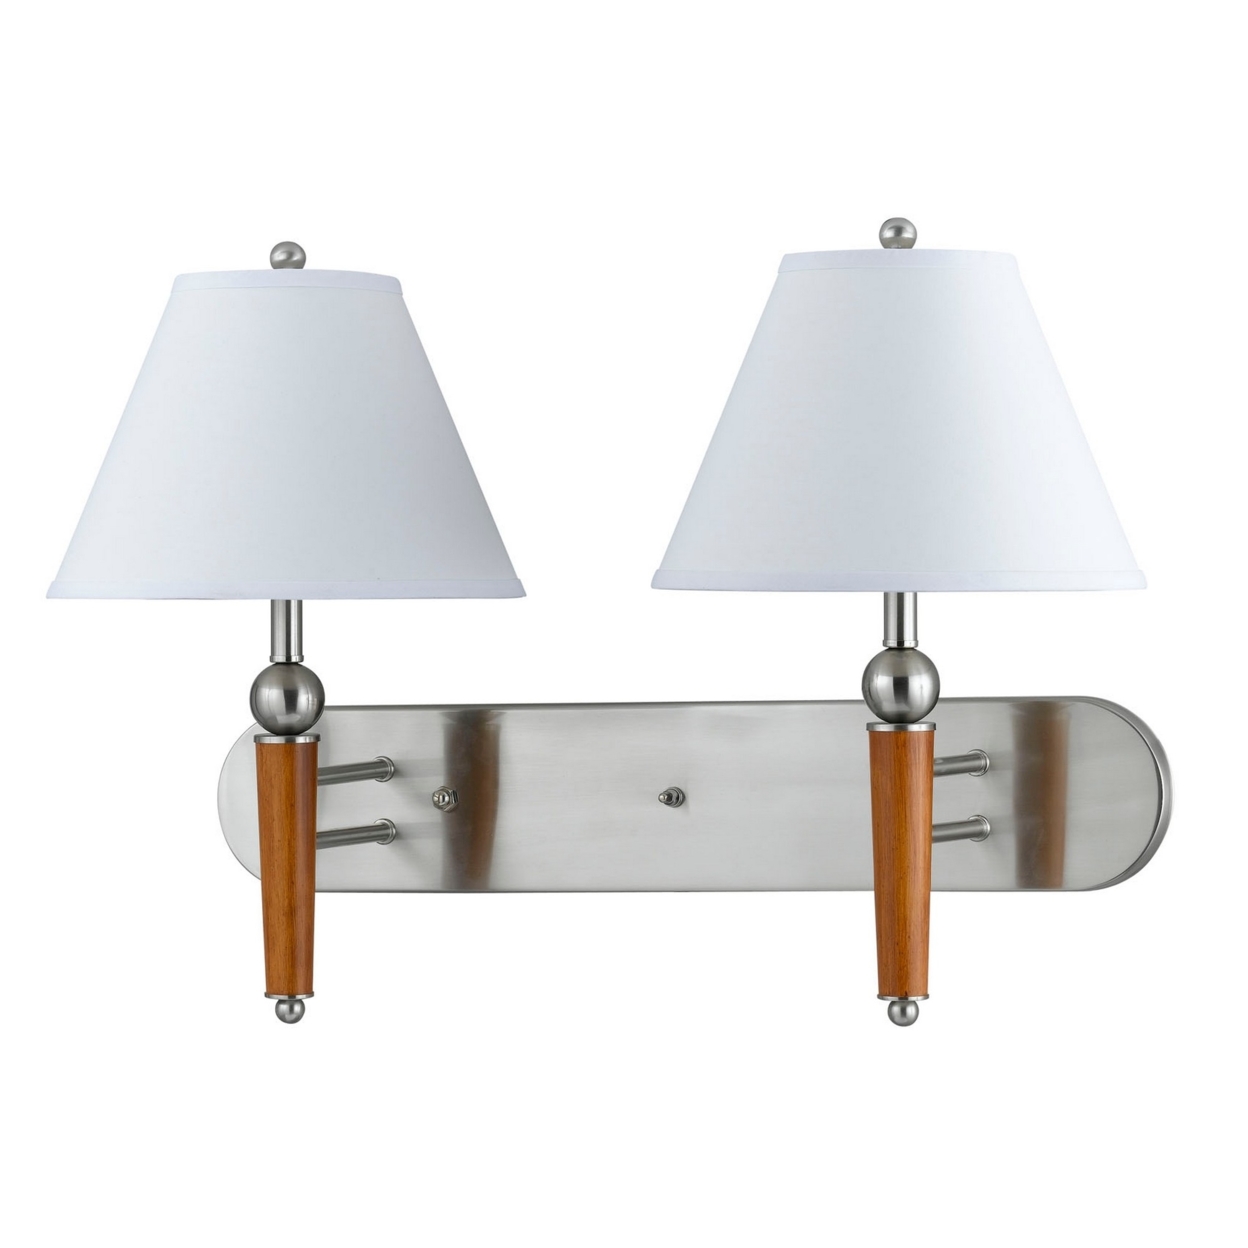 3 Way Dual Wall Lamp With Fabric Shade, Brown And White- Saltoro Sherpi